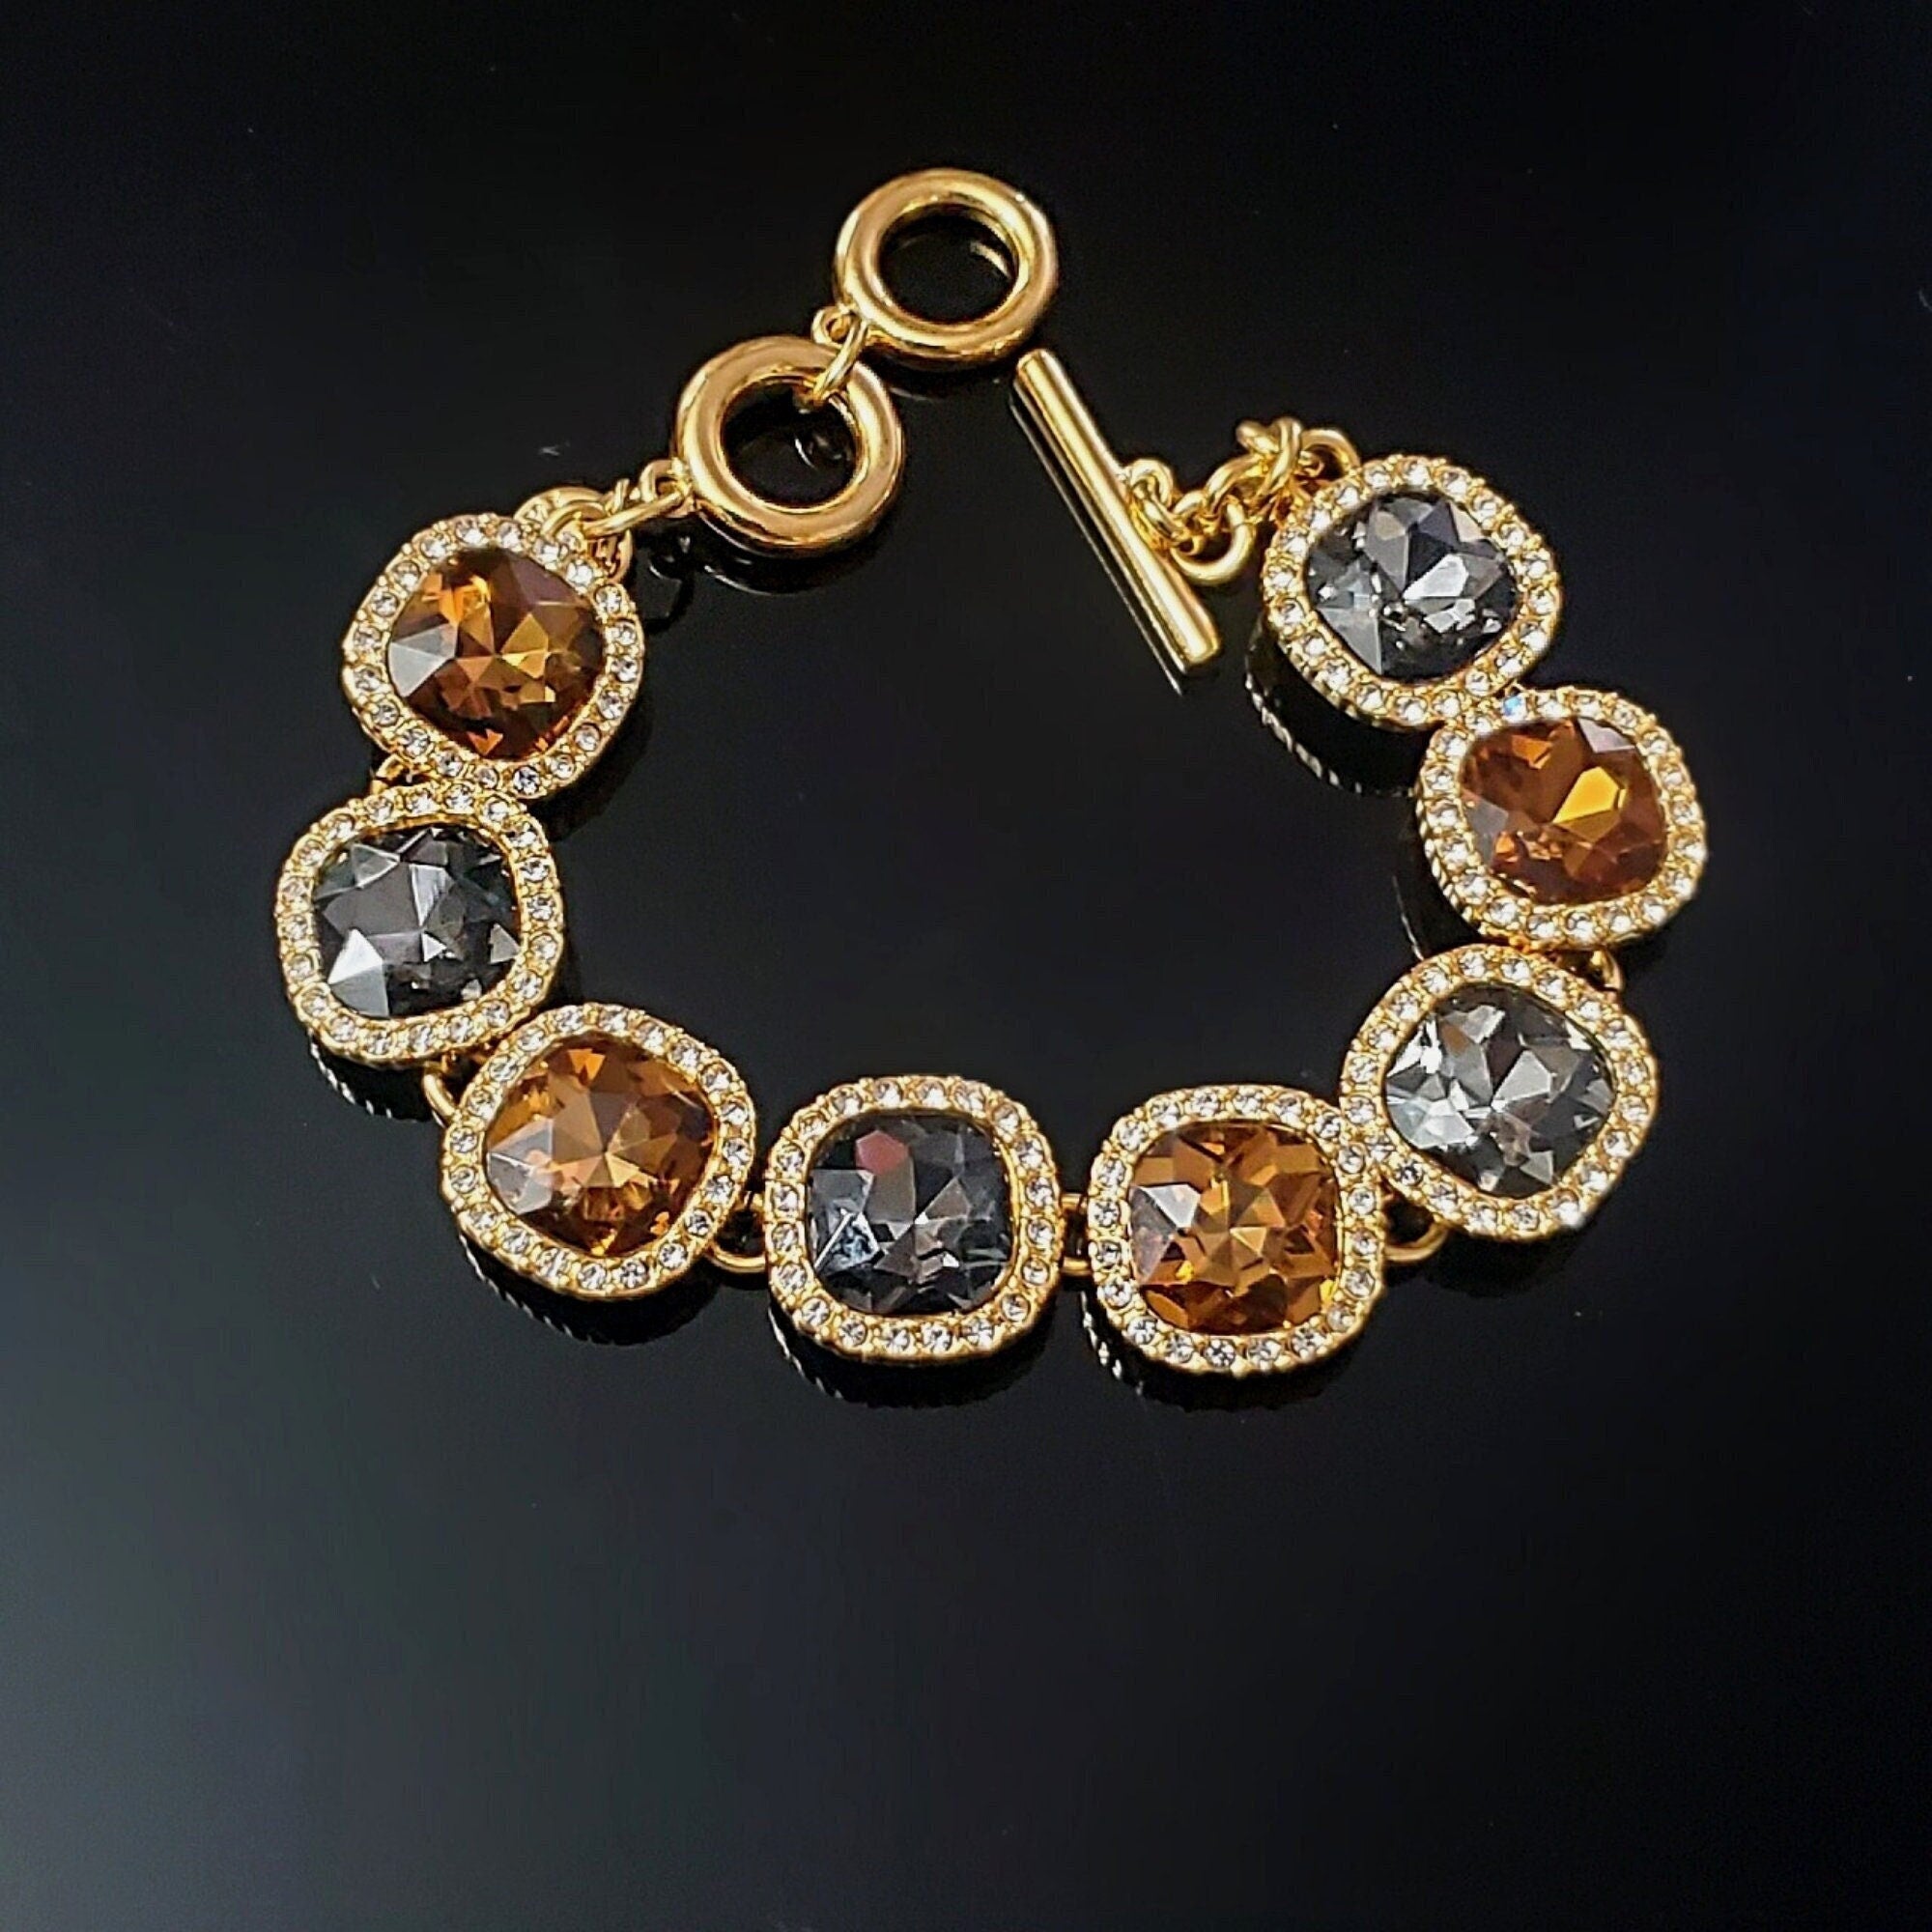 Stunning Smokey Quartz Crystal Gold Plated Bracelet Fits up to 6.5" to 8" Wrist